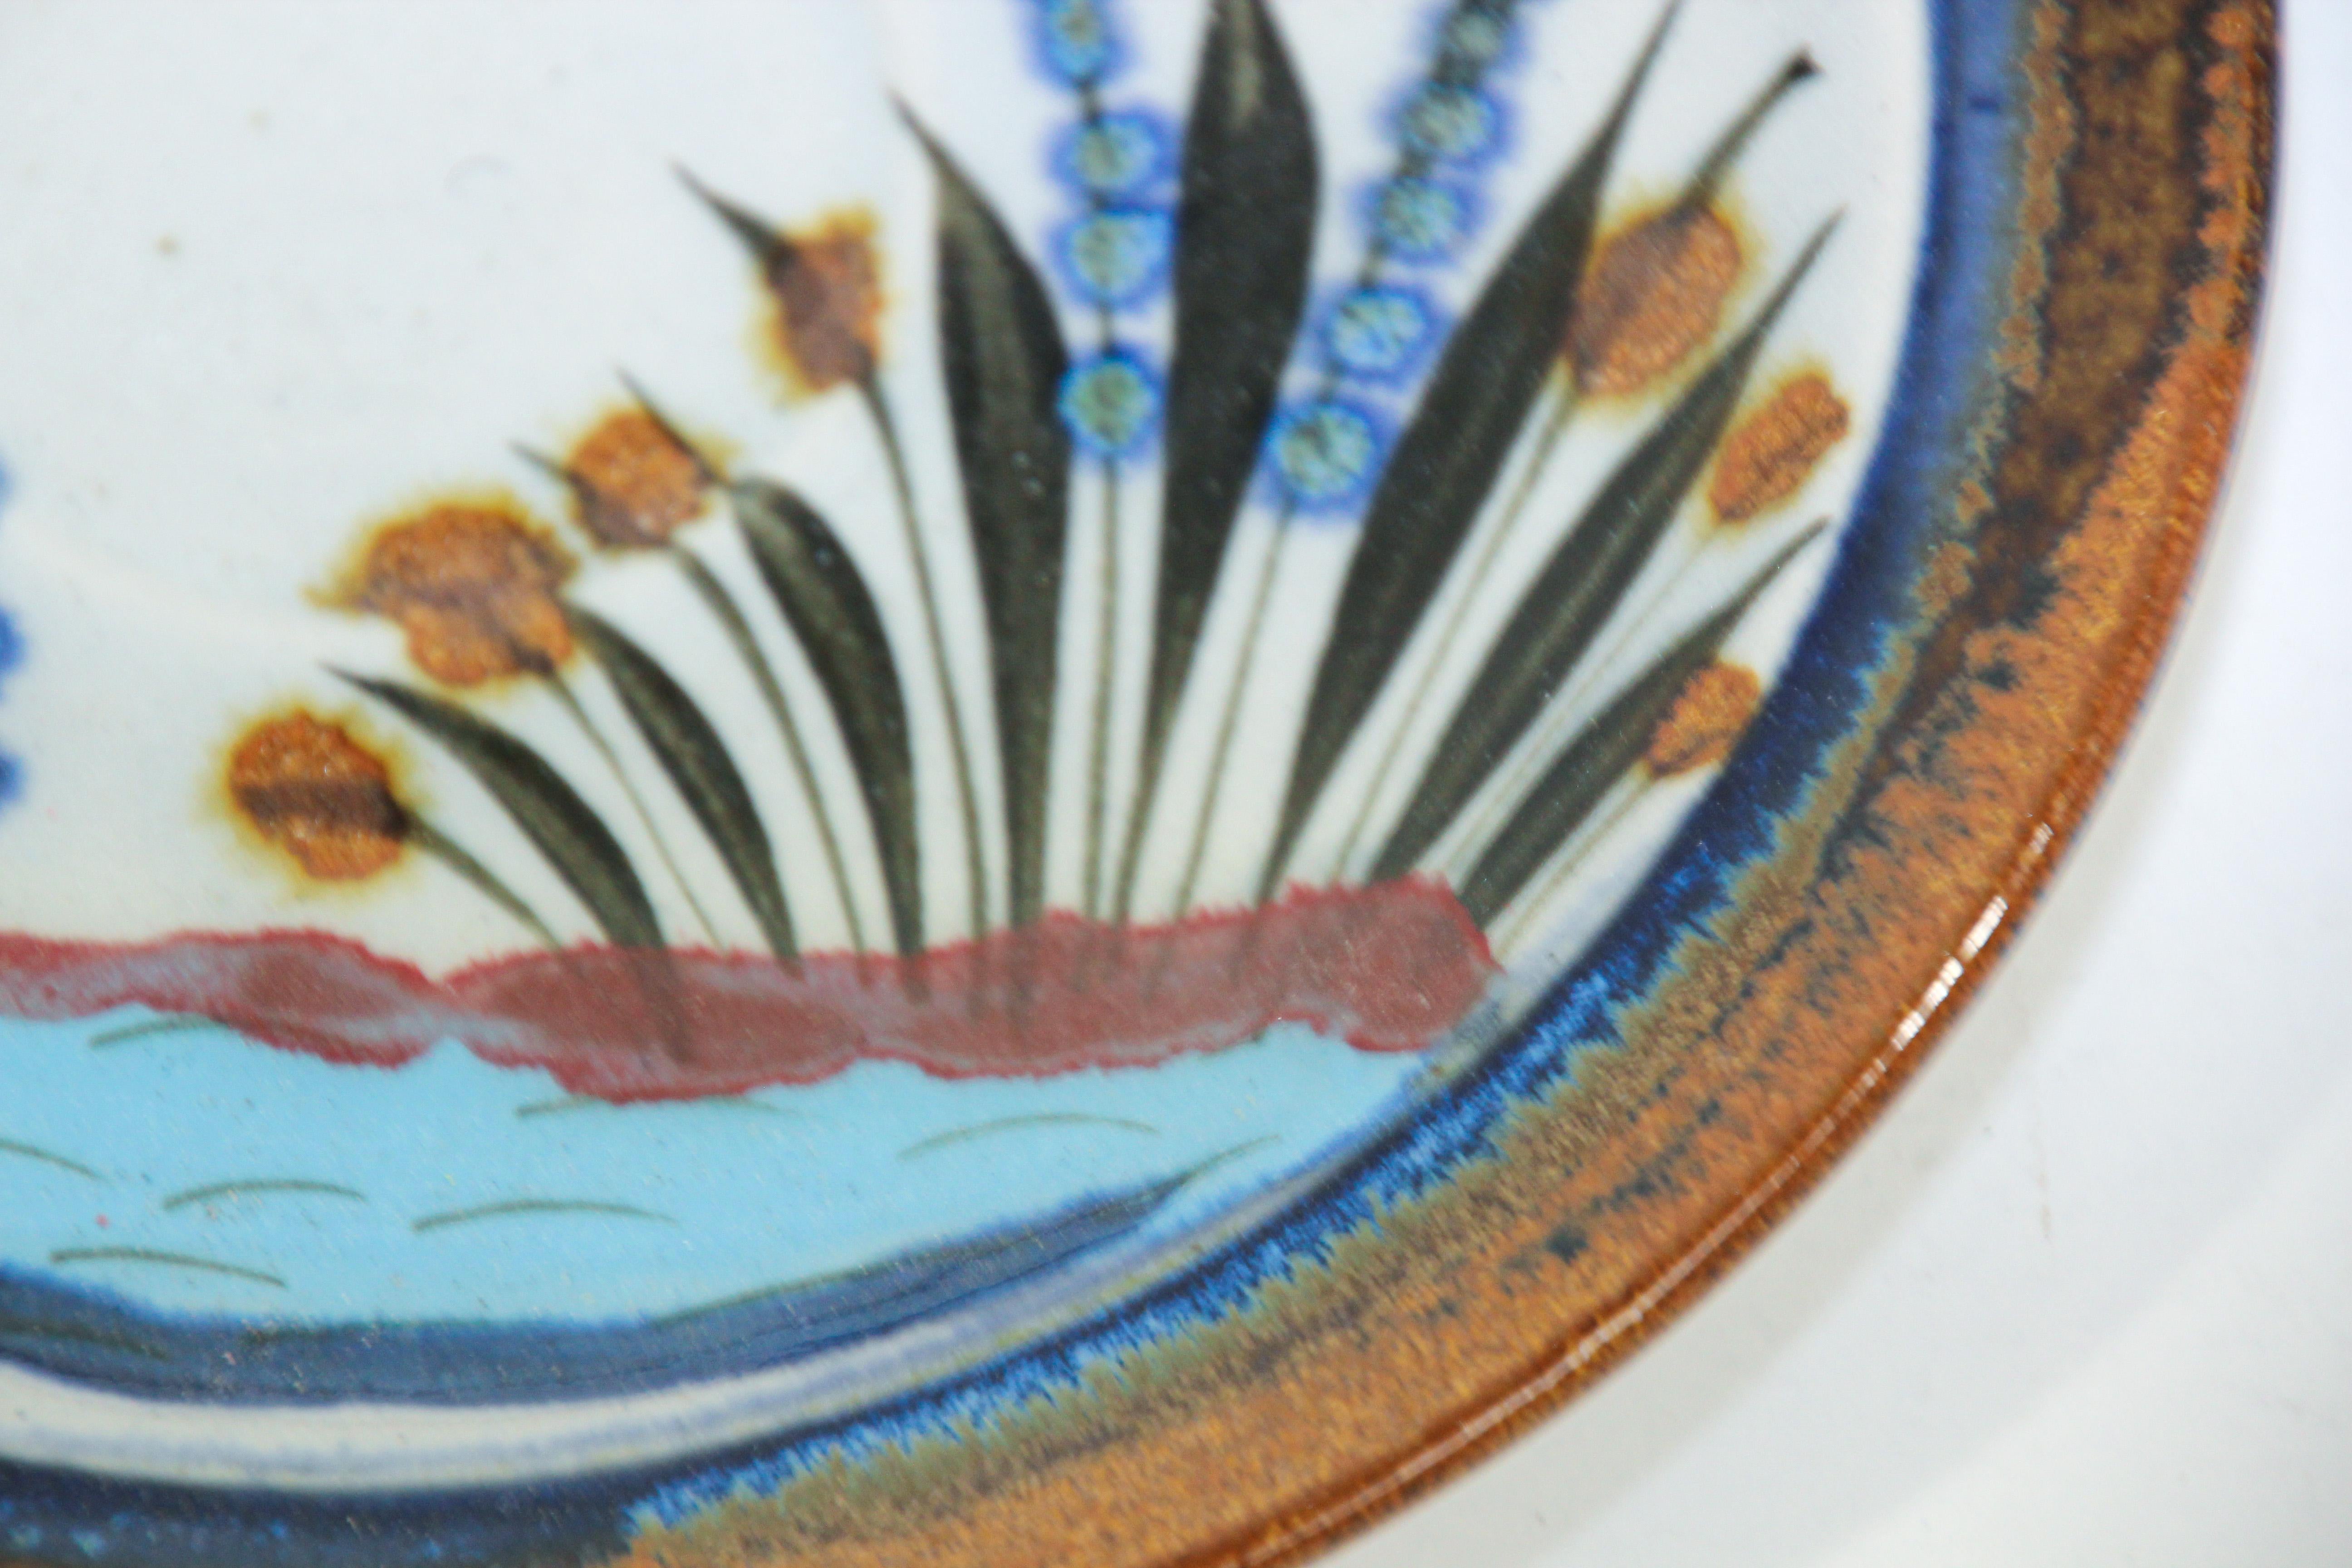 Handgefertigte Ken Edwards Tonala Mexico Volkskunst-Keramik (Mexikanisch)